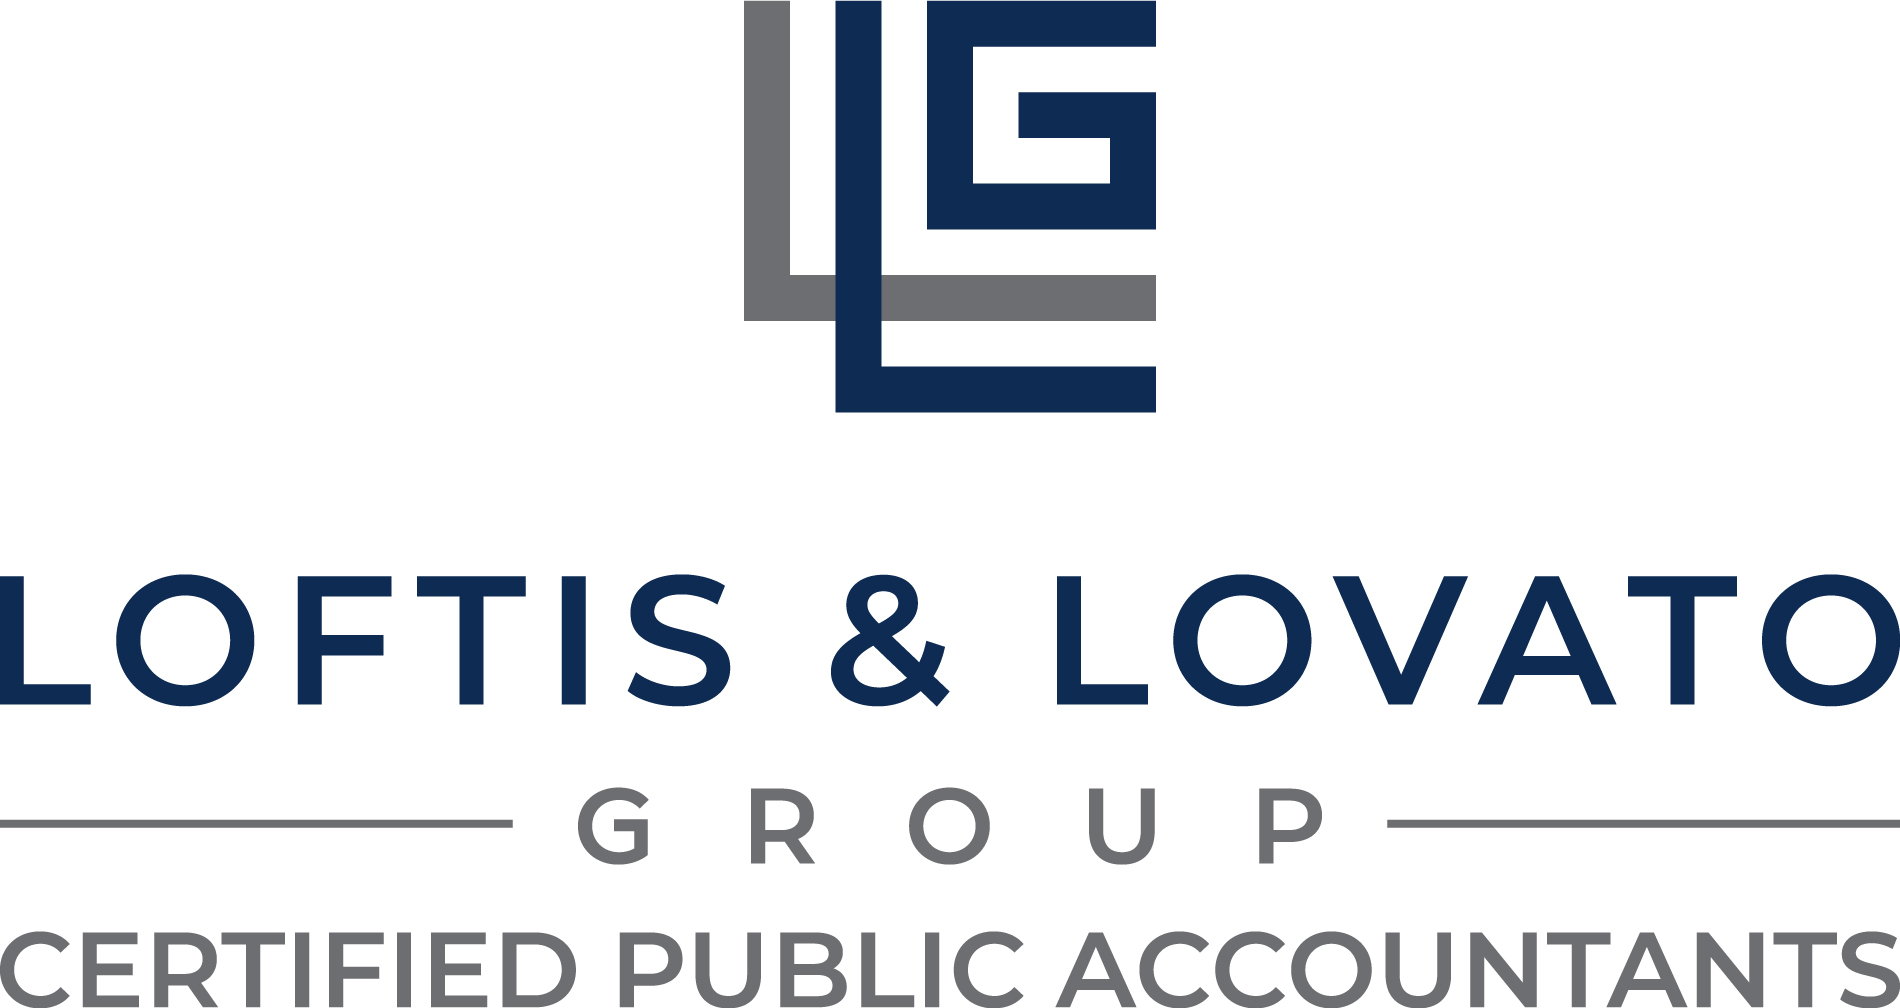 Loftis & Lovato Group